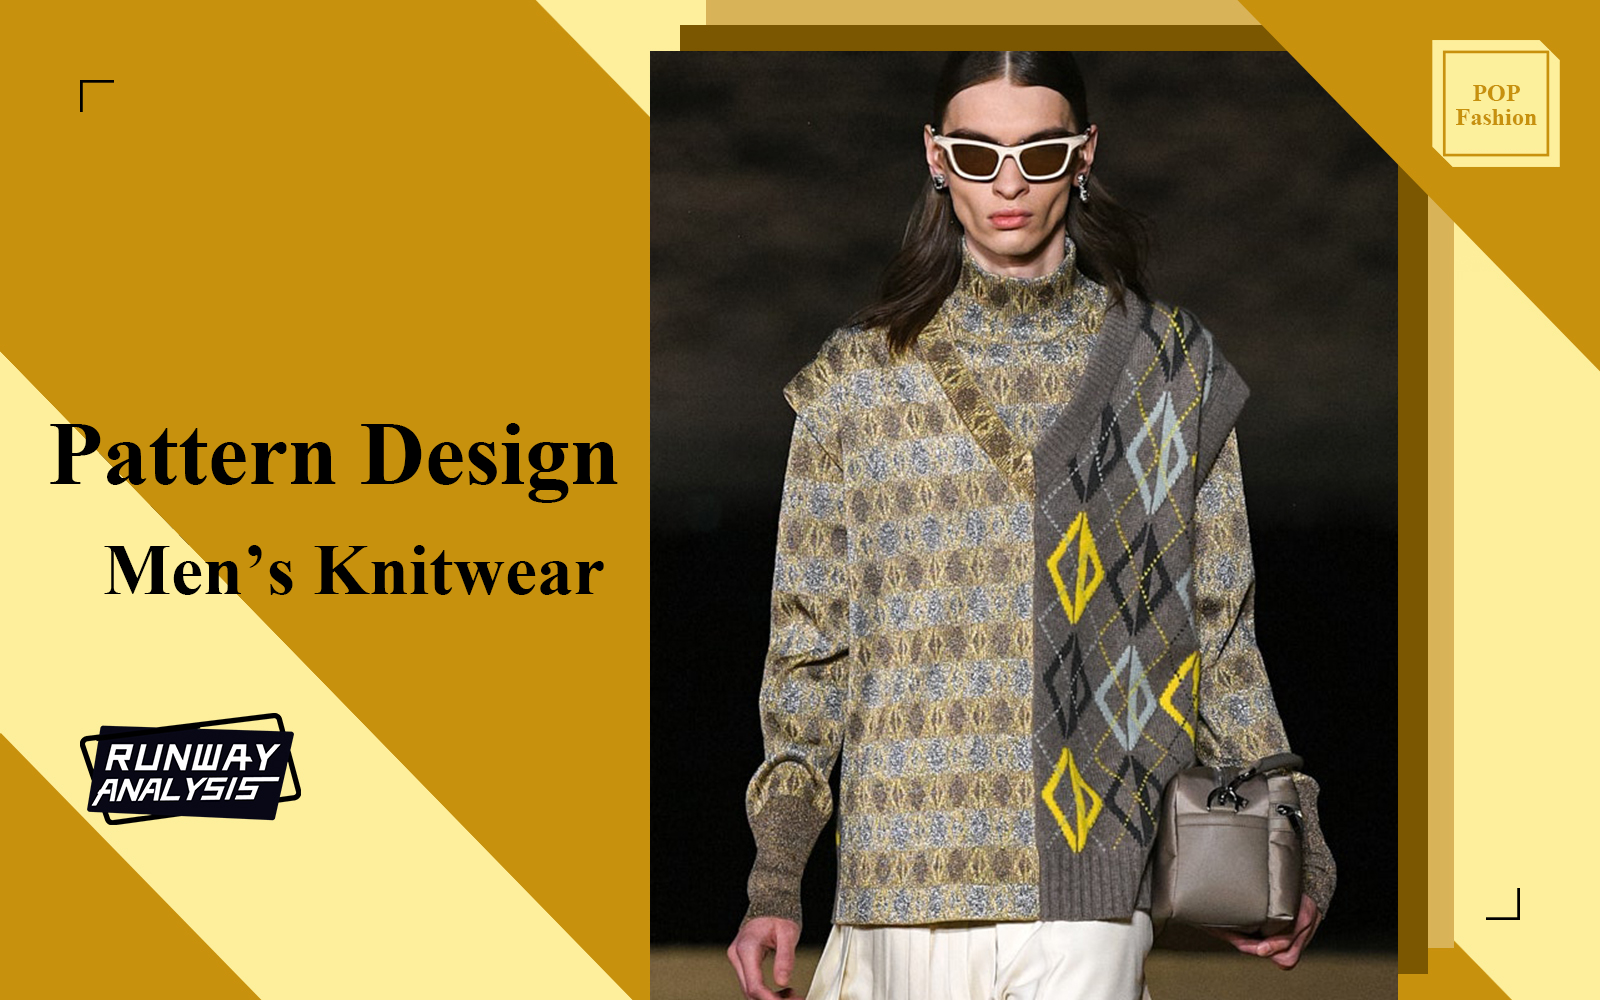 Pattern Design -- The Comprehensive Runway Analysis of Men's Knitwear